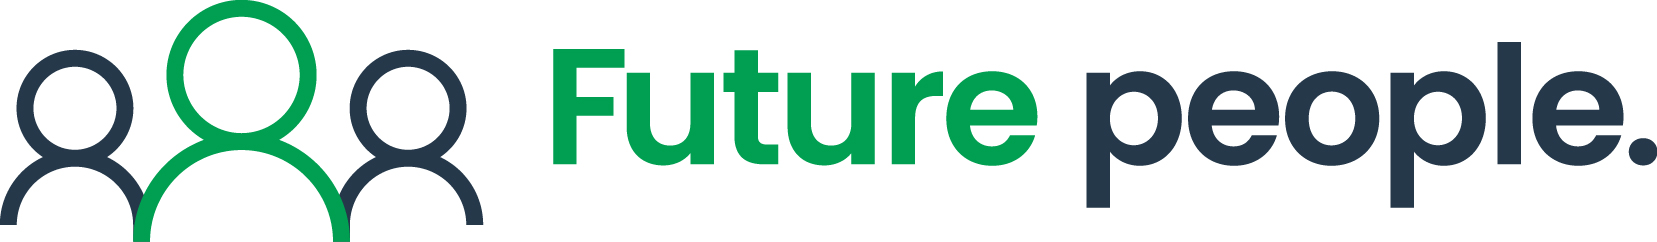 UN Futurepeople Logo RGB Positive